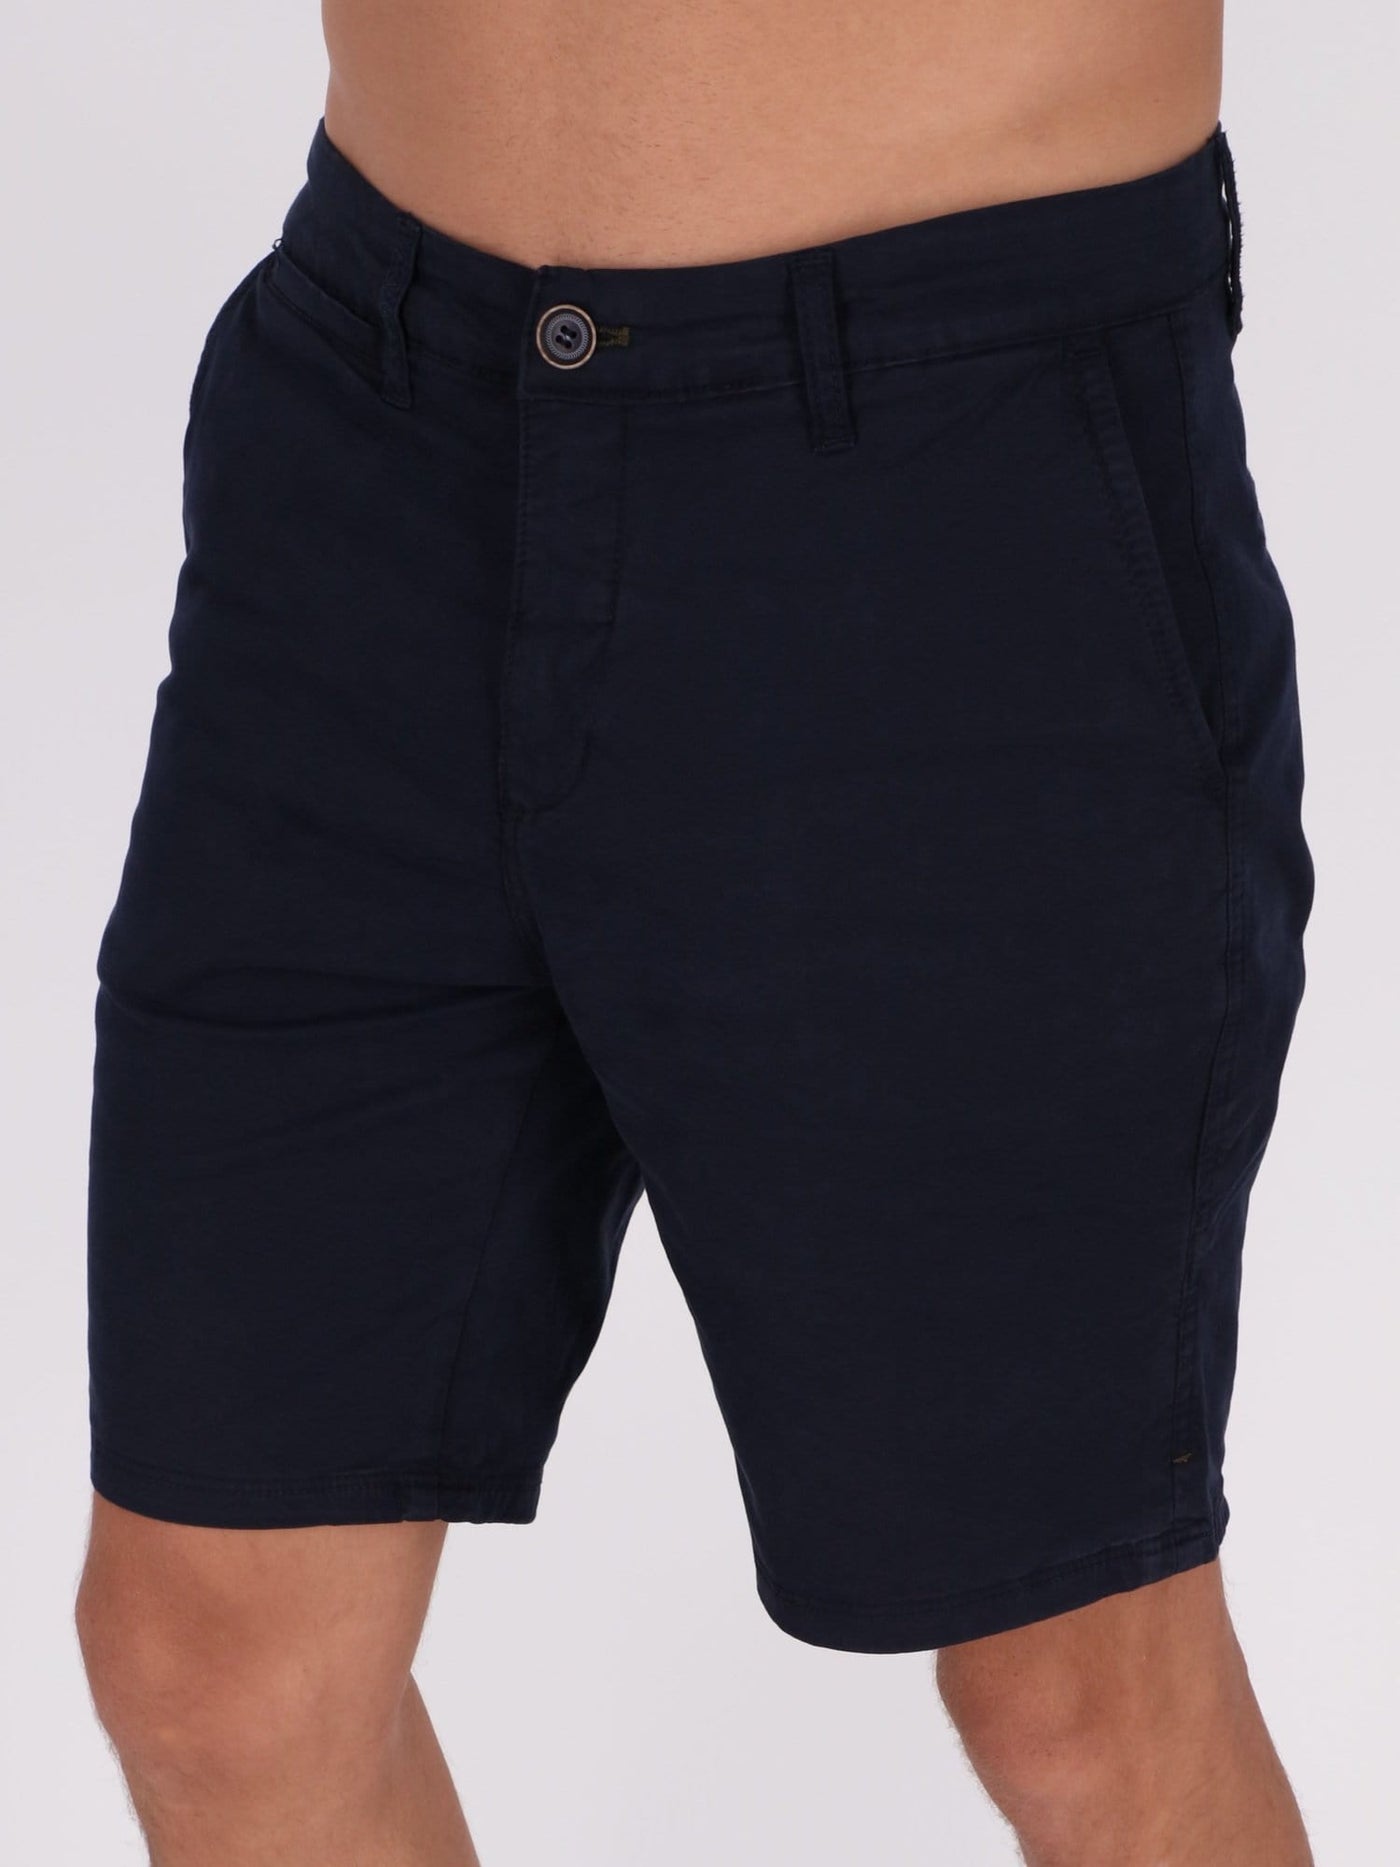 OR Pants & Shorts Basic Chino Shorts with Back and Side Pockets